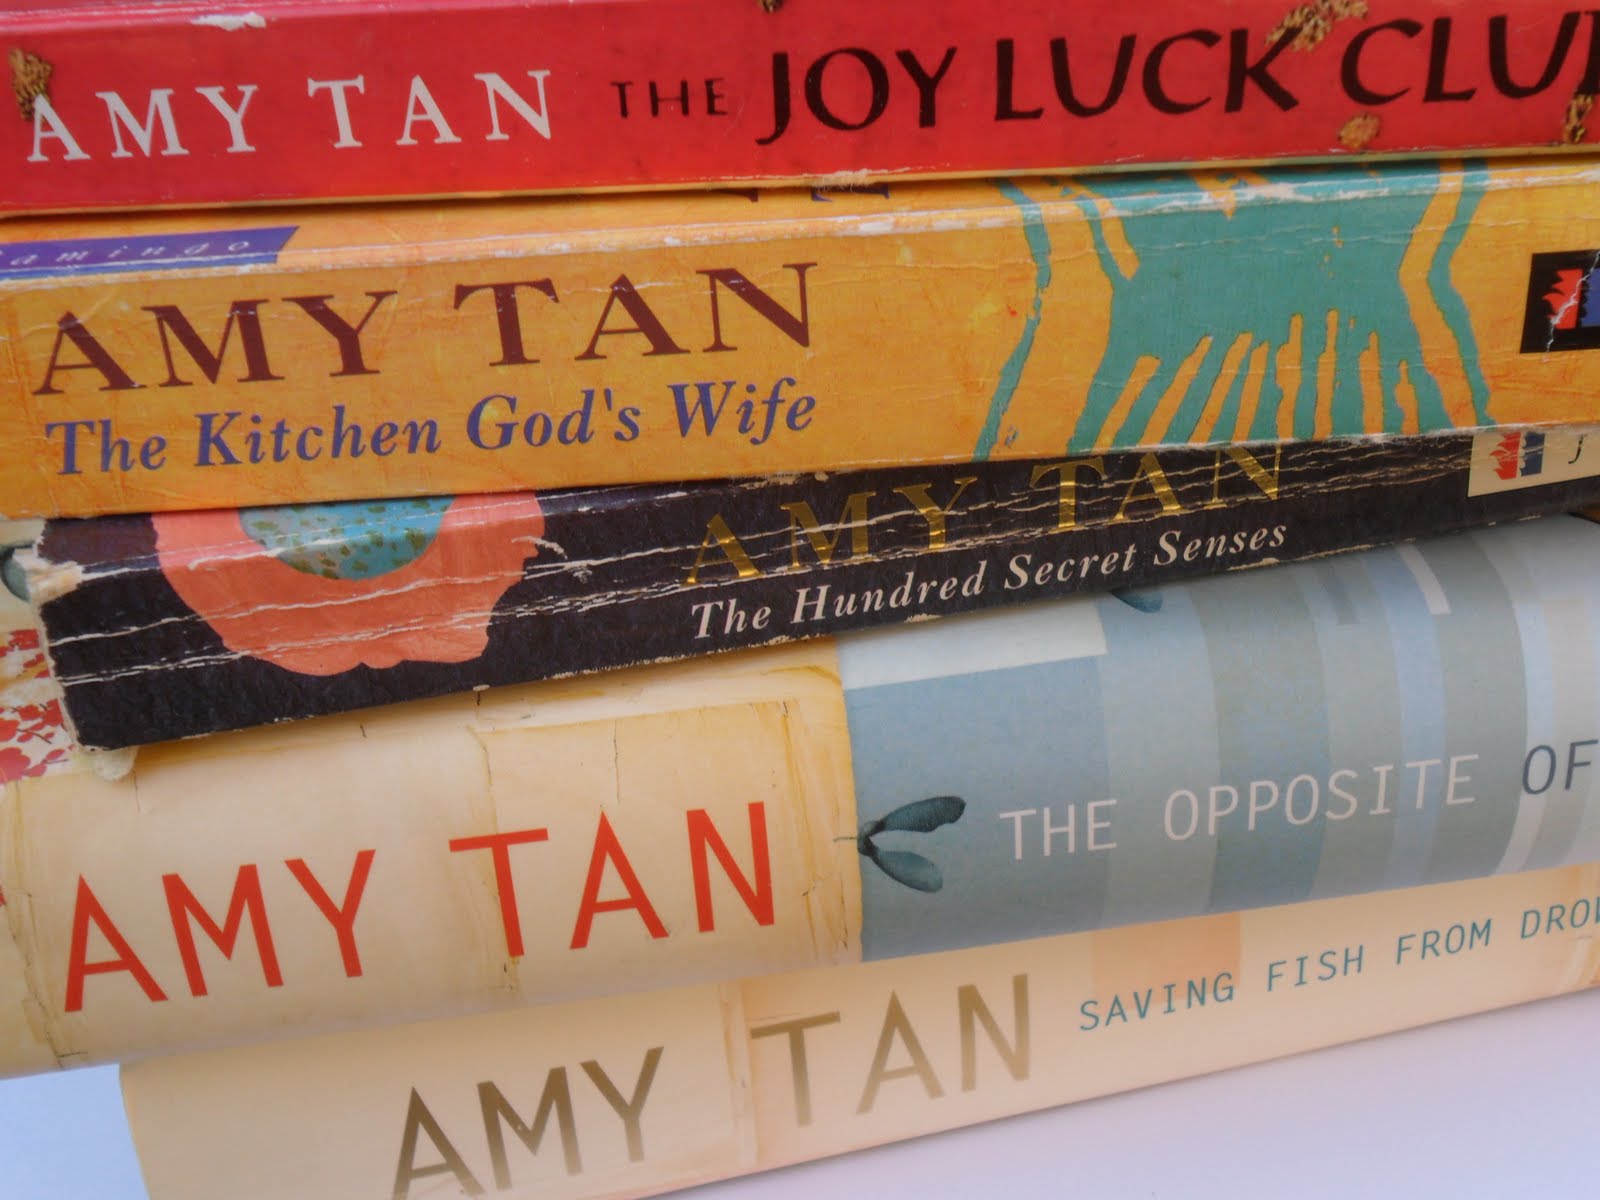 The Hundred Secret Senses by Amy Tan.